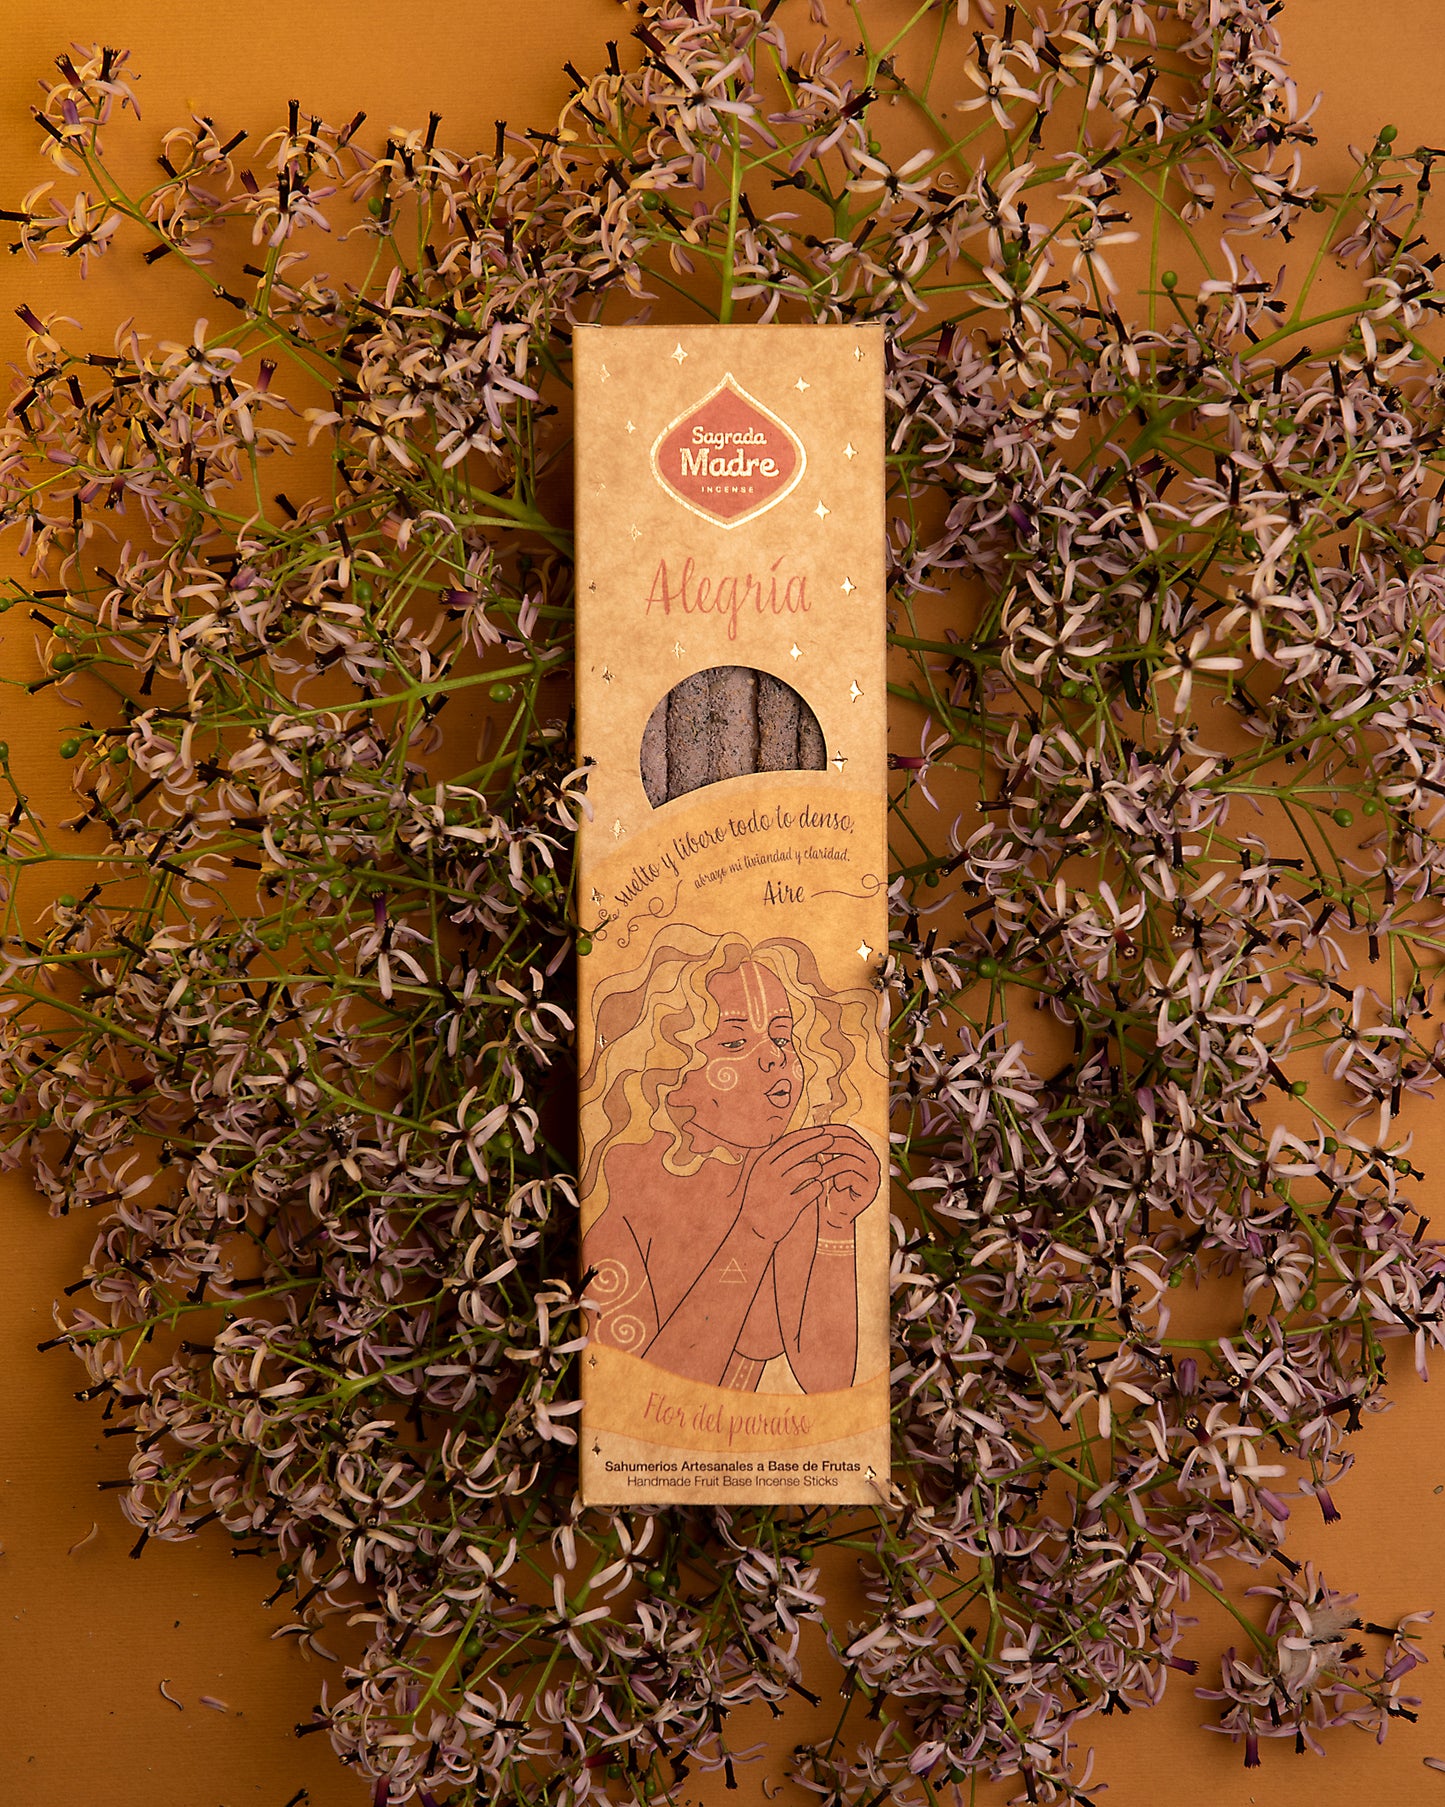 Air Element Paradise flower incense sticks Sagrada Madre